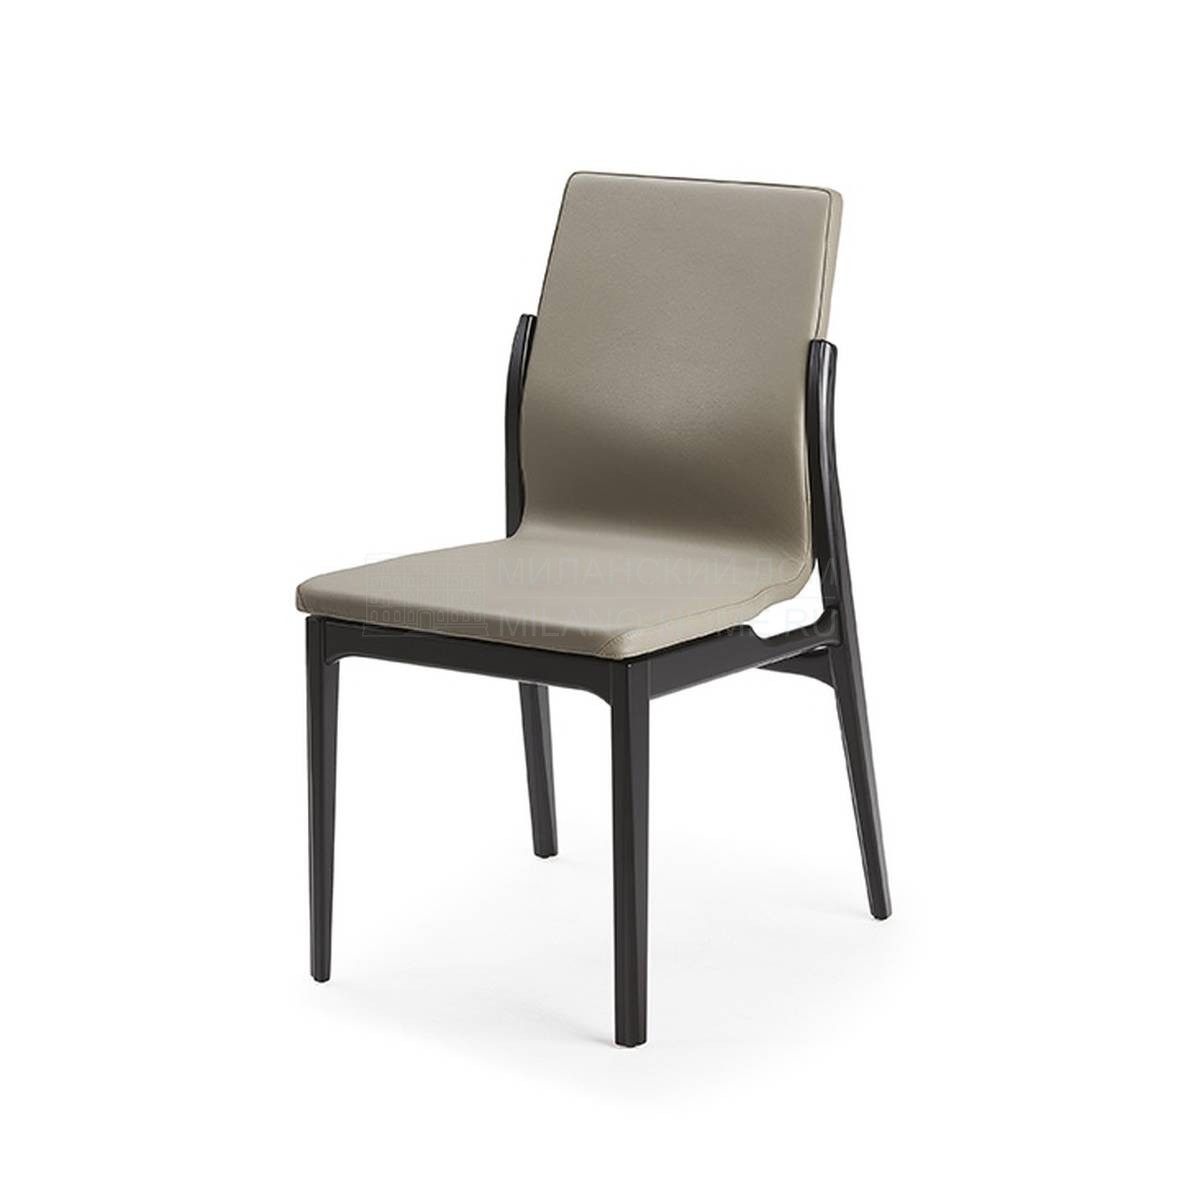 Кожаный стул Ginevra chair из Италии фабрики CATTELAN ITALIA